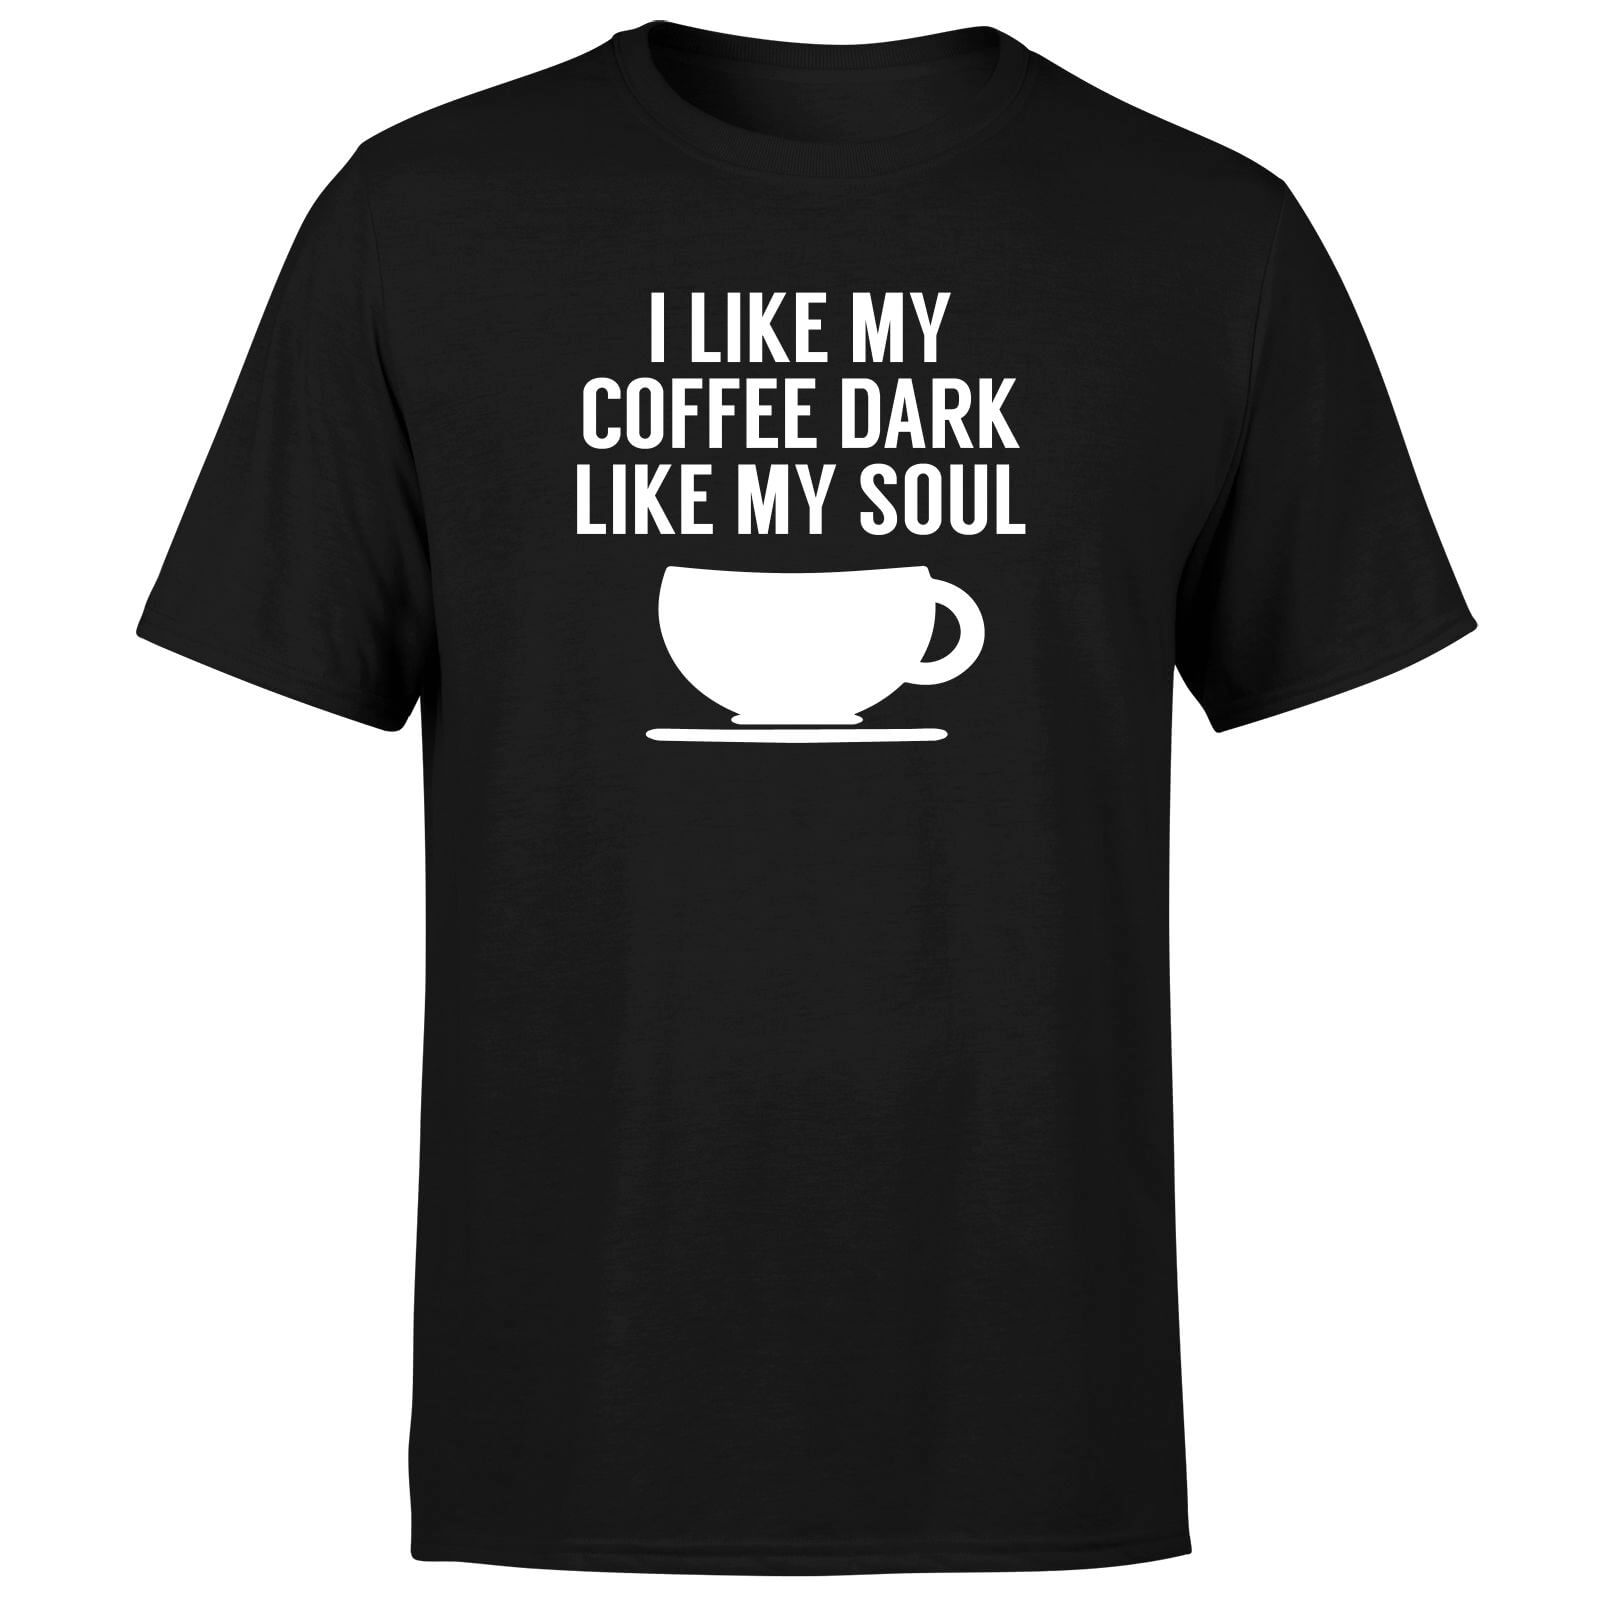 I Like my Coffee Dark Like my Soul T-Shirt - Black - S - Black